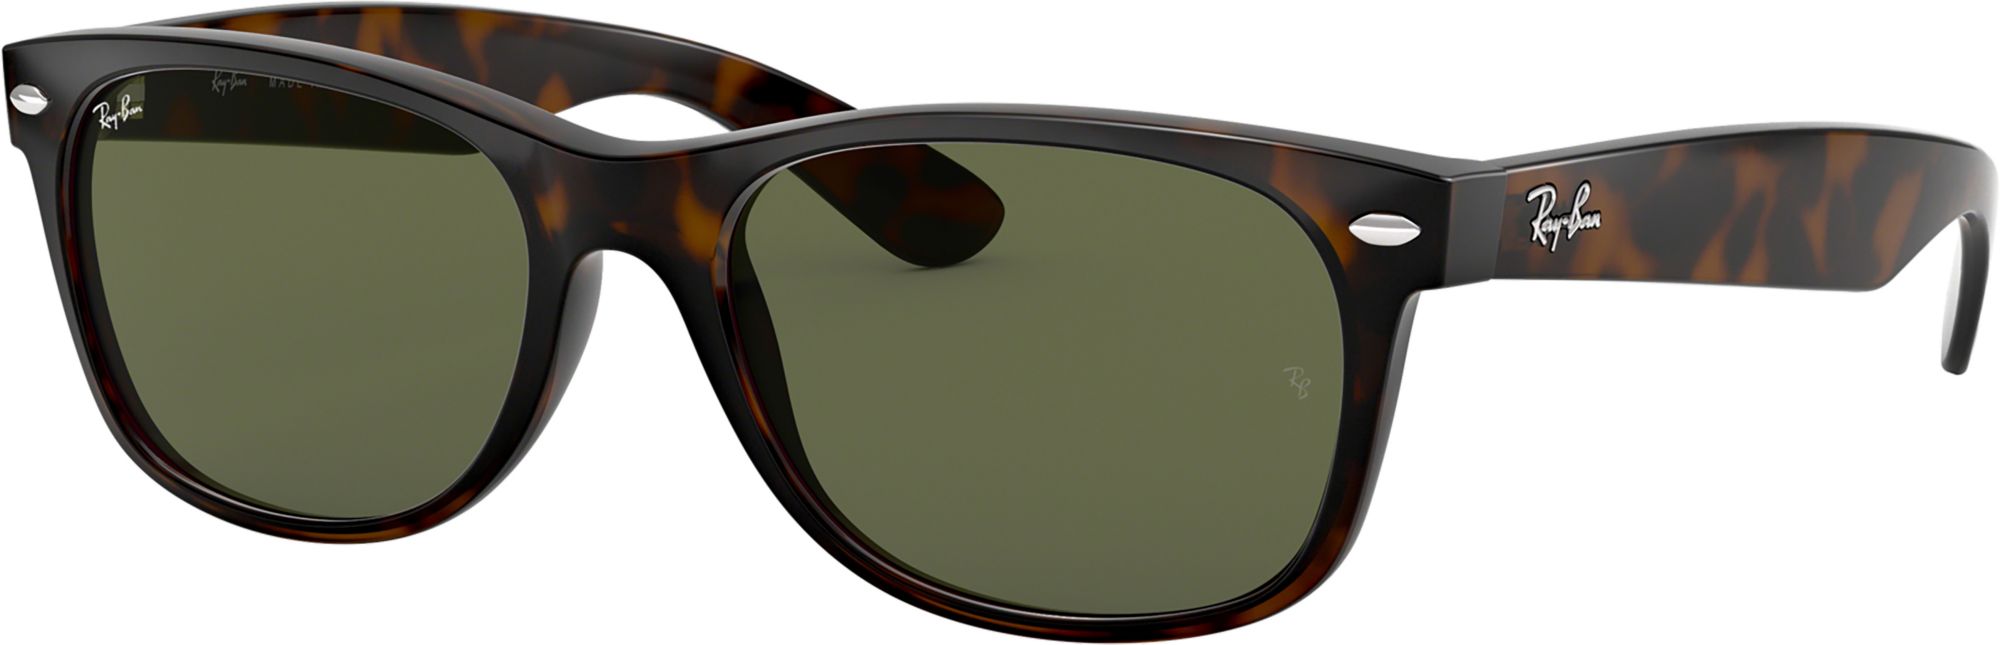 Photos - Sunglasses Ray-Ban New Wayfarer Matte , Men's, Tortoise/Green 16RYBUNWWYFRR 